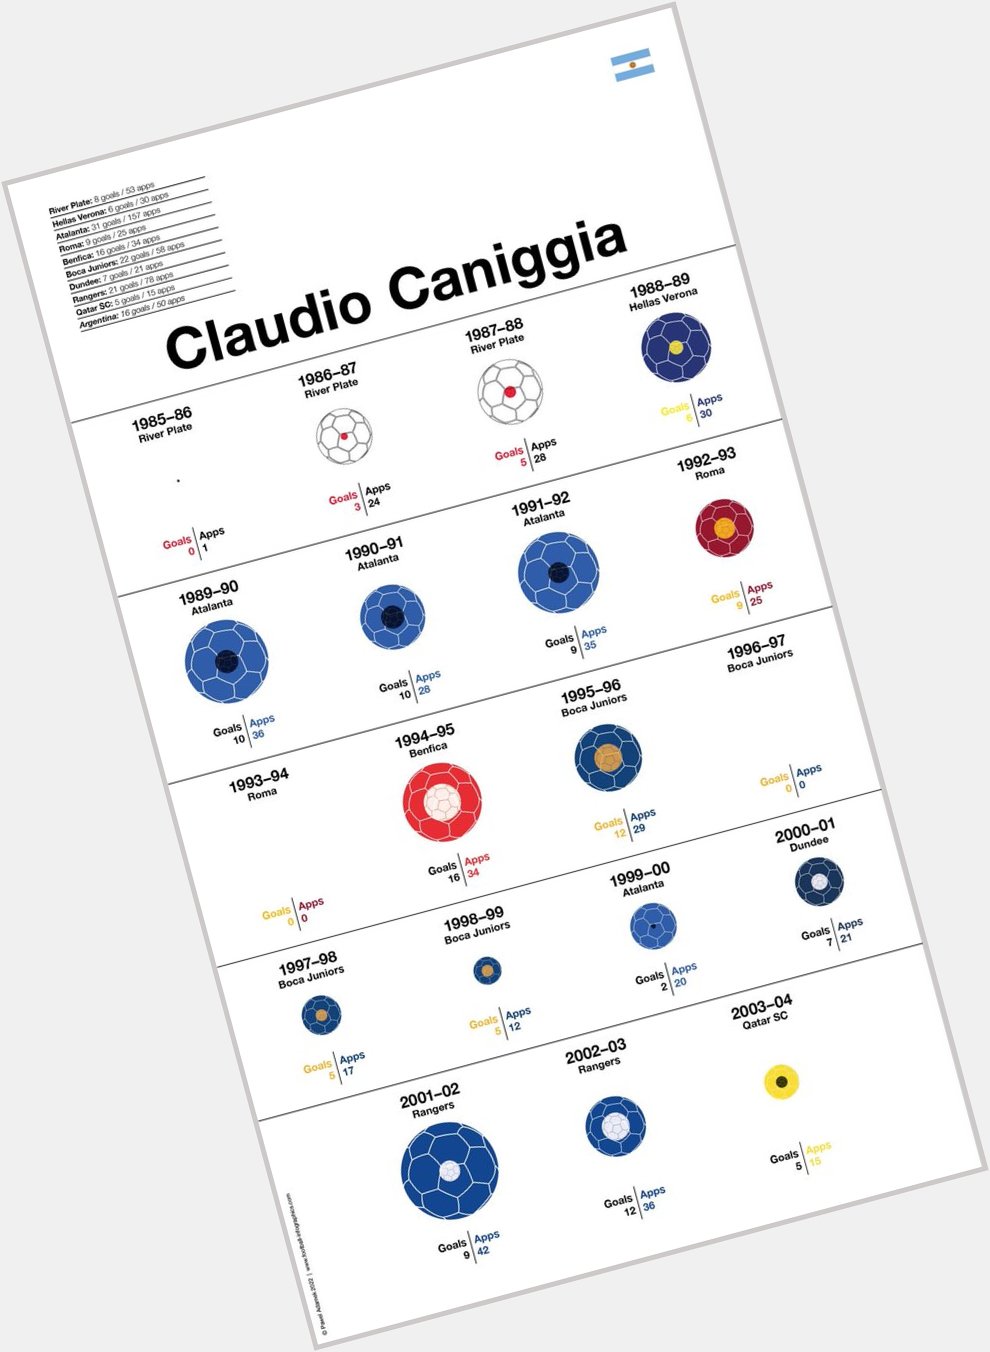 Happy Birthday to Claudio Caniggia!     